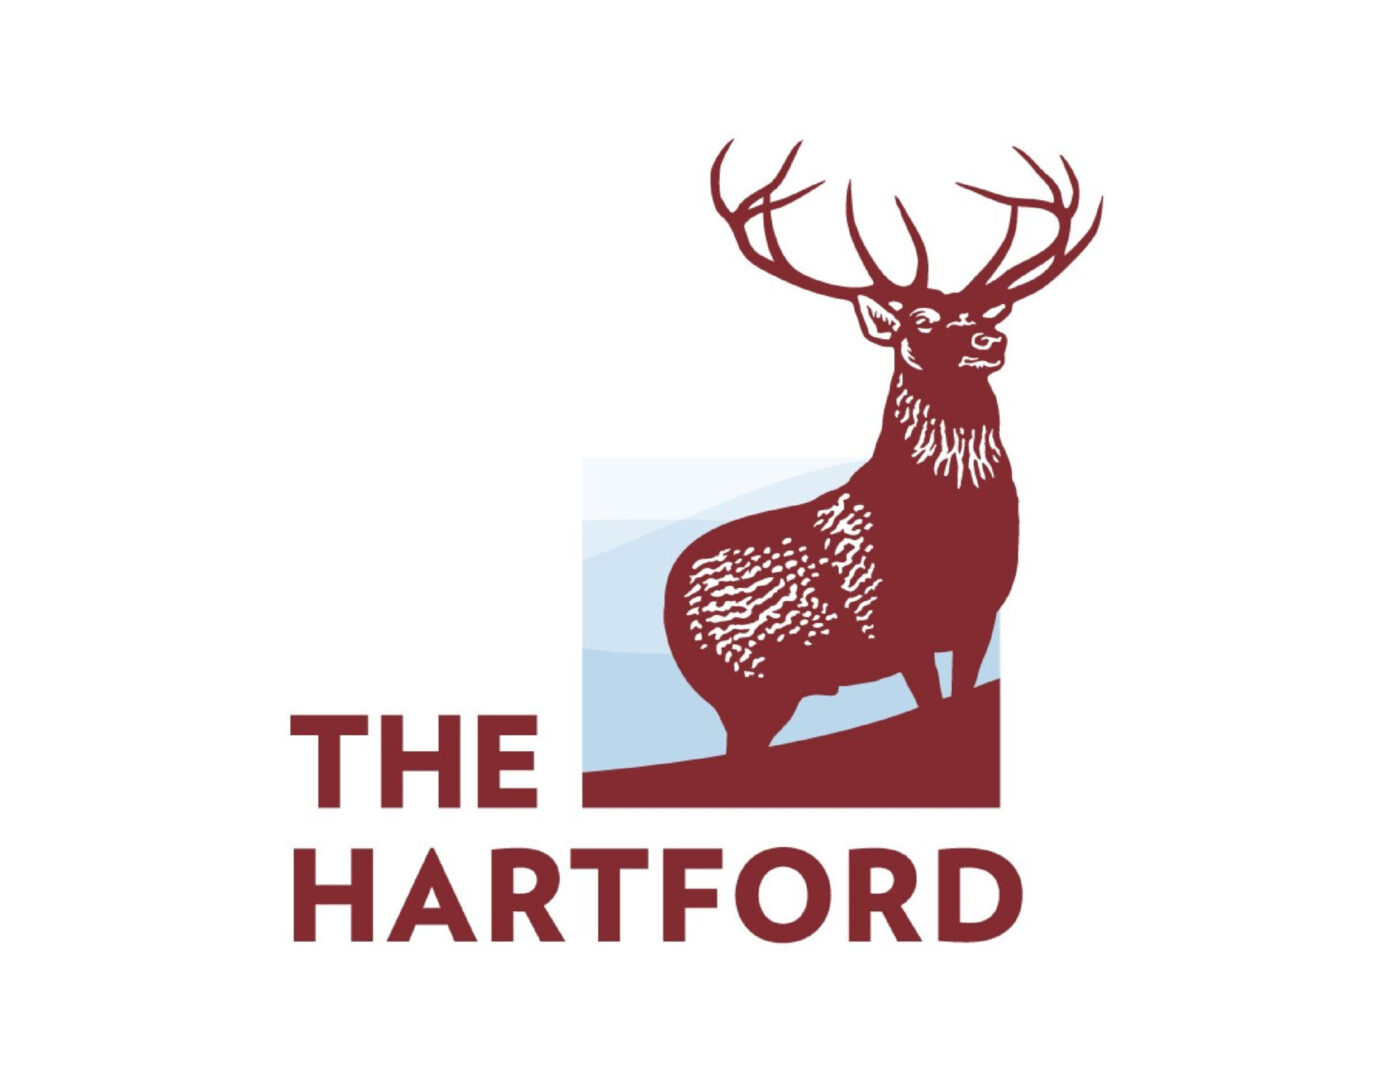 The Hartford logo and illustration